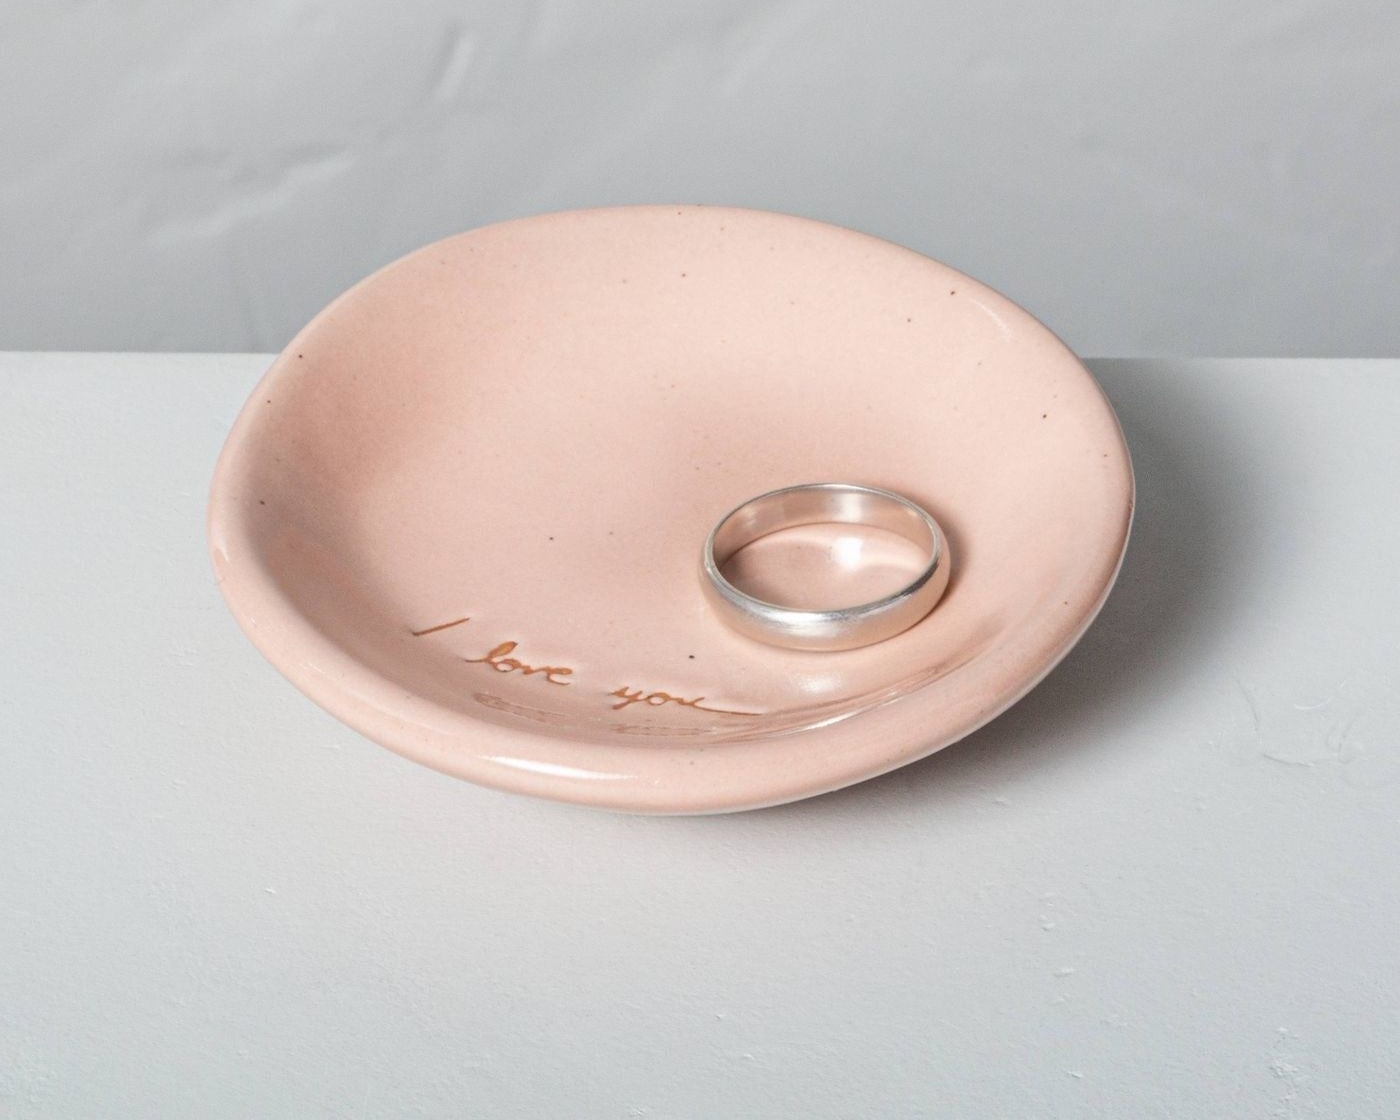 The pink ceramic trinket dish